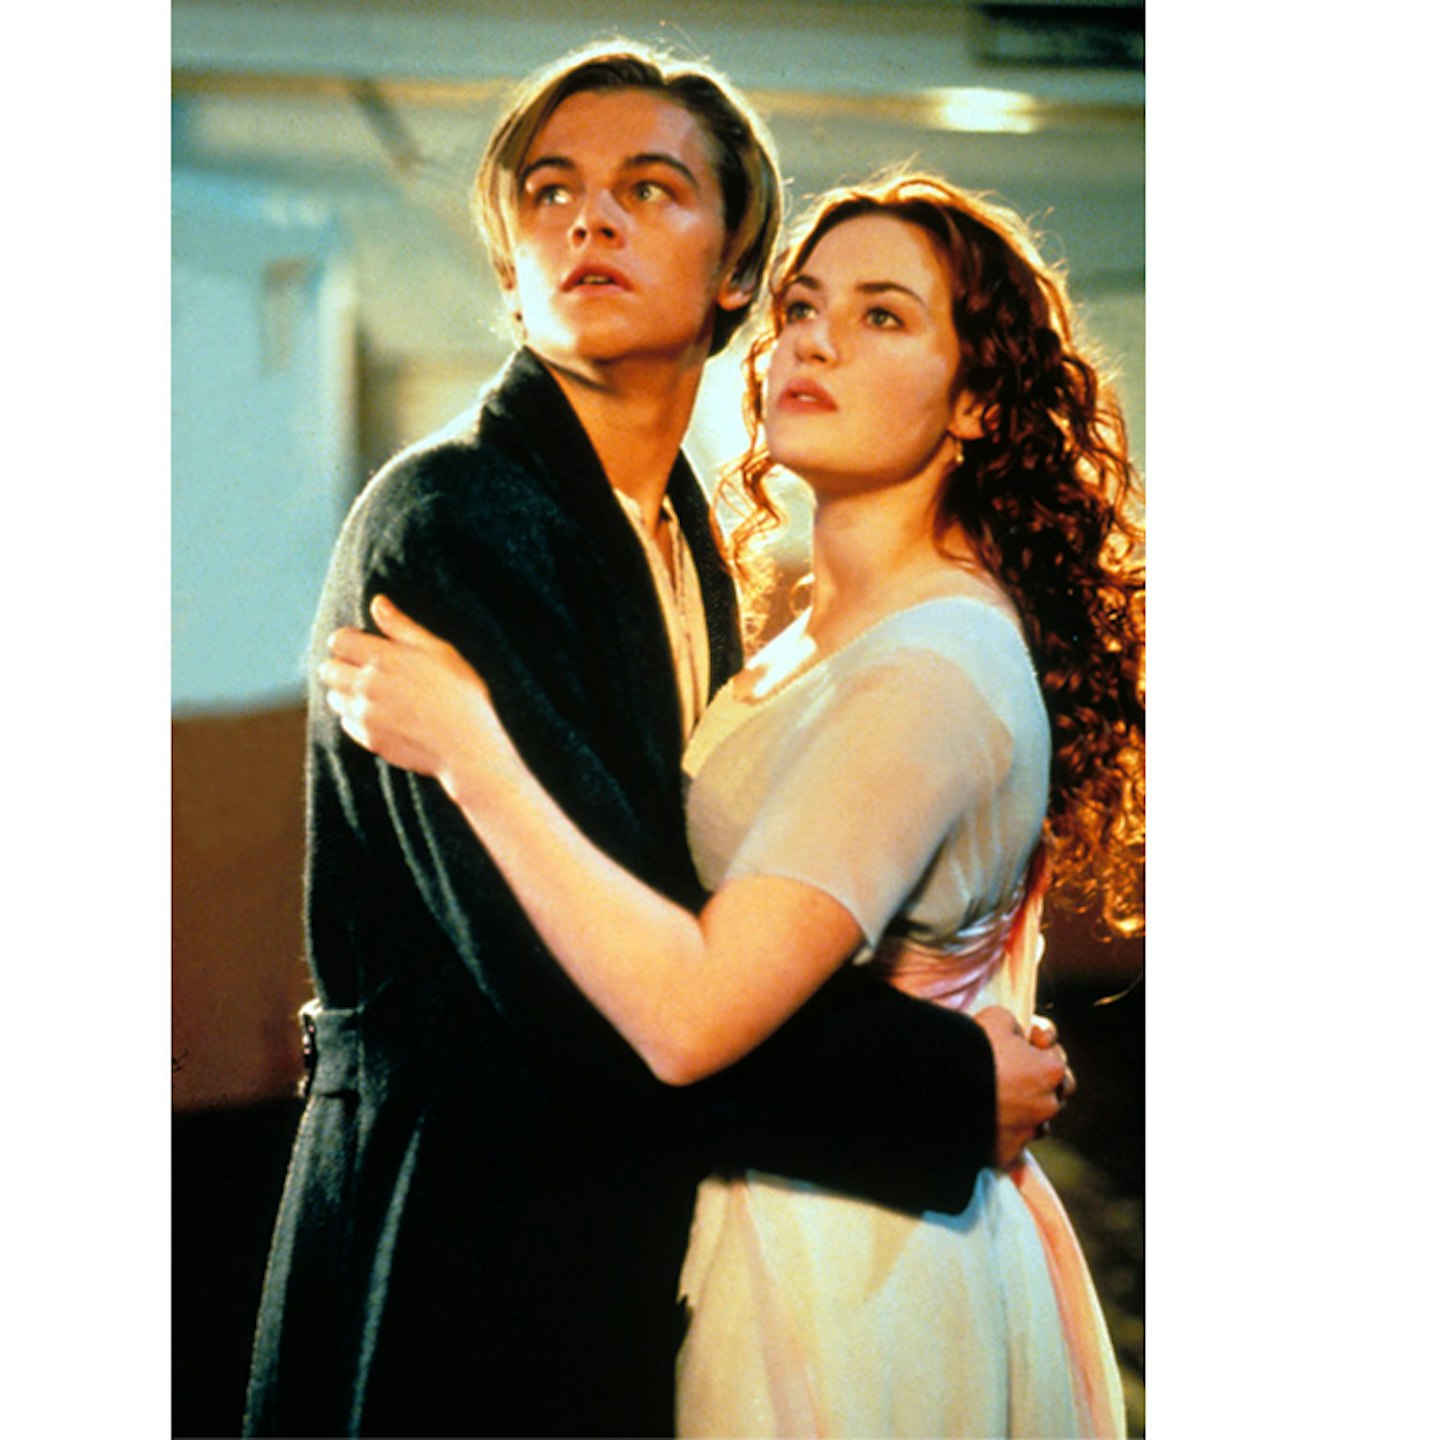 Kate Winslet and Leonardo Di Caprio star in the the award winning tear jerker